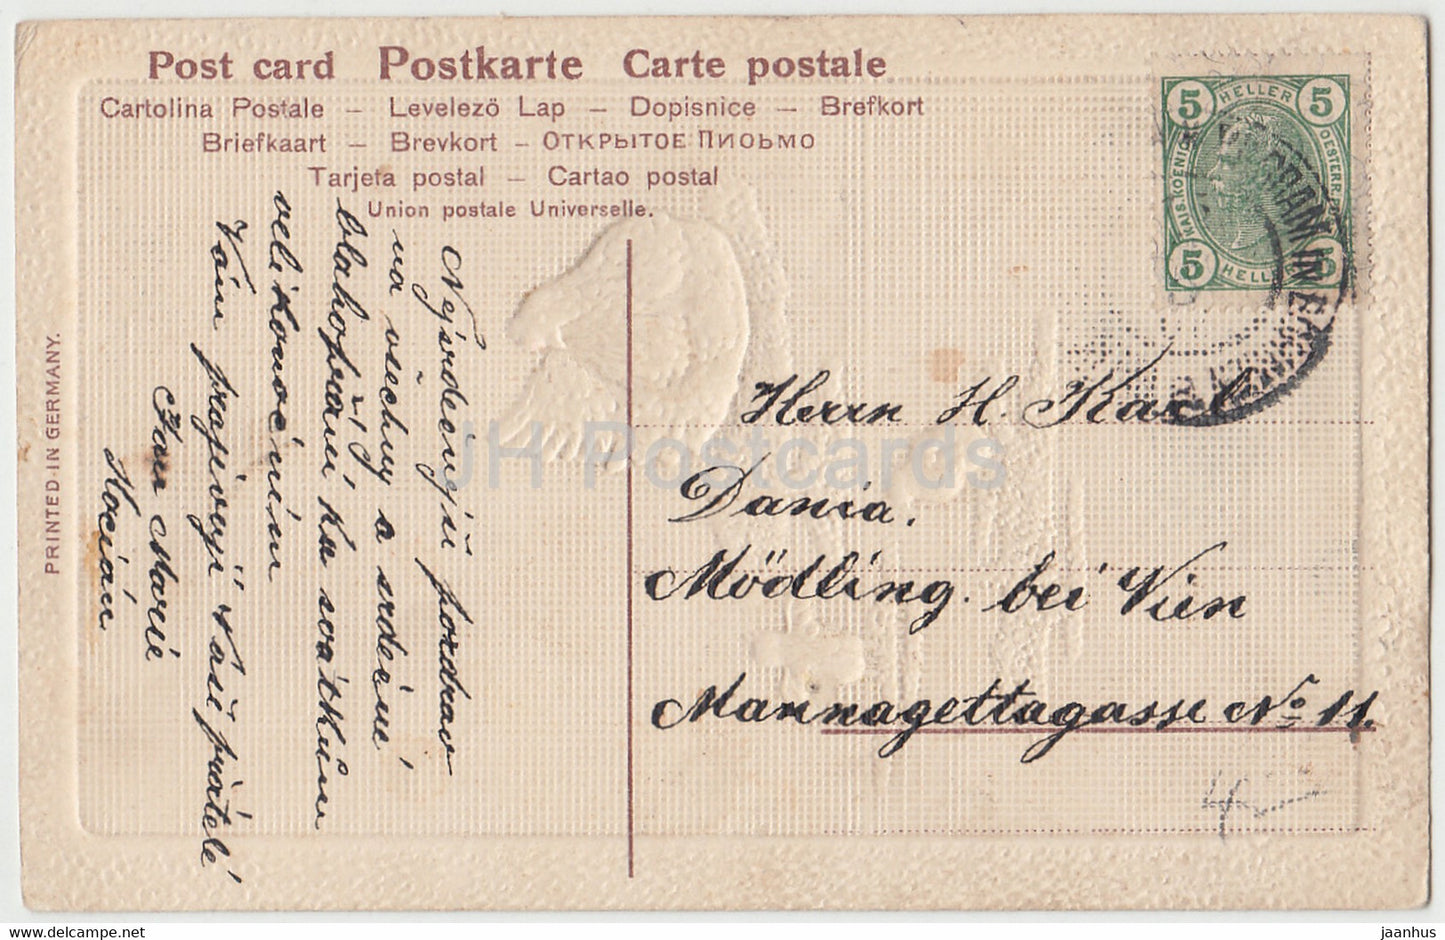 Easter Greeting Card - Vesele Velikonoce - chicken - Ser 350 - old postcard - Germany - used